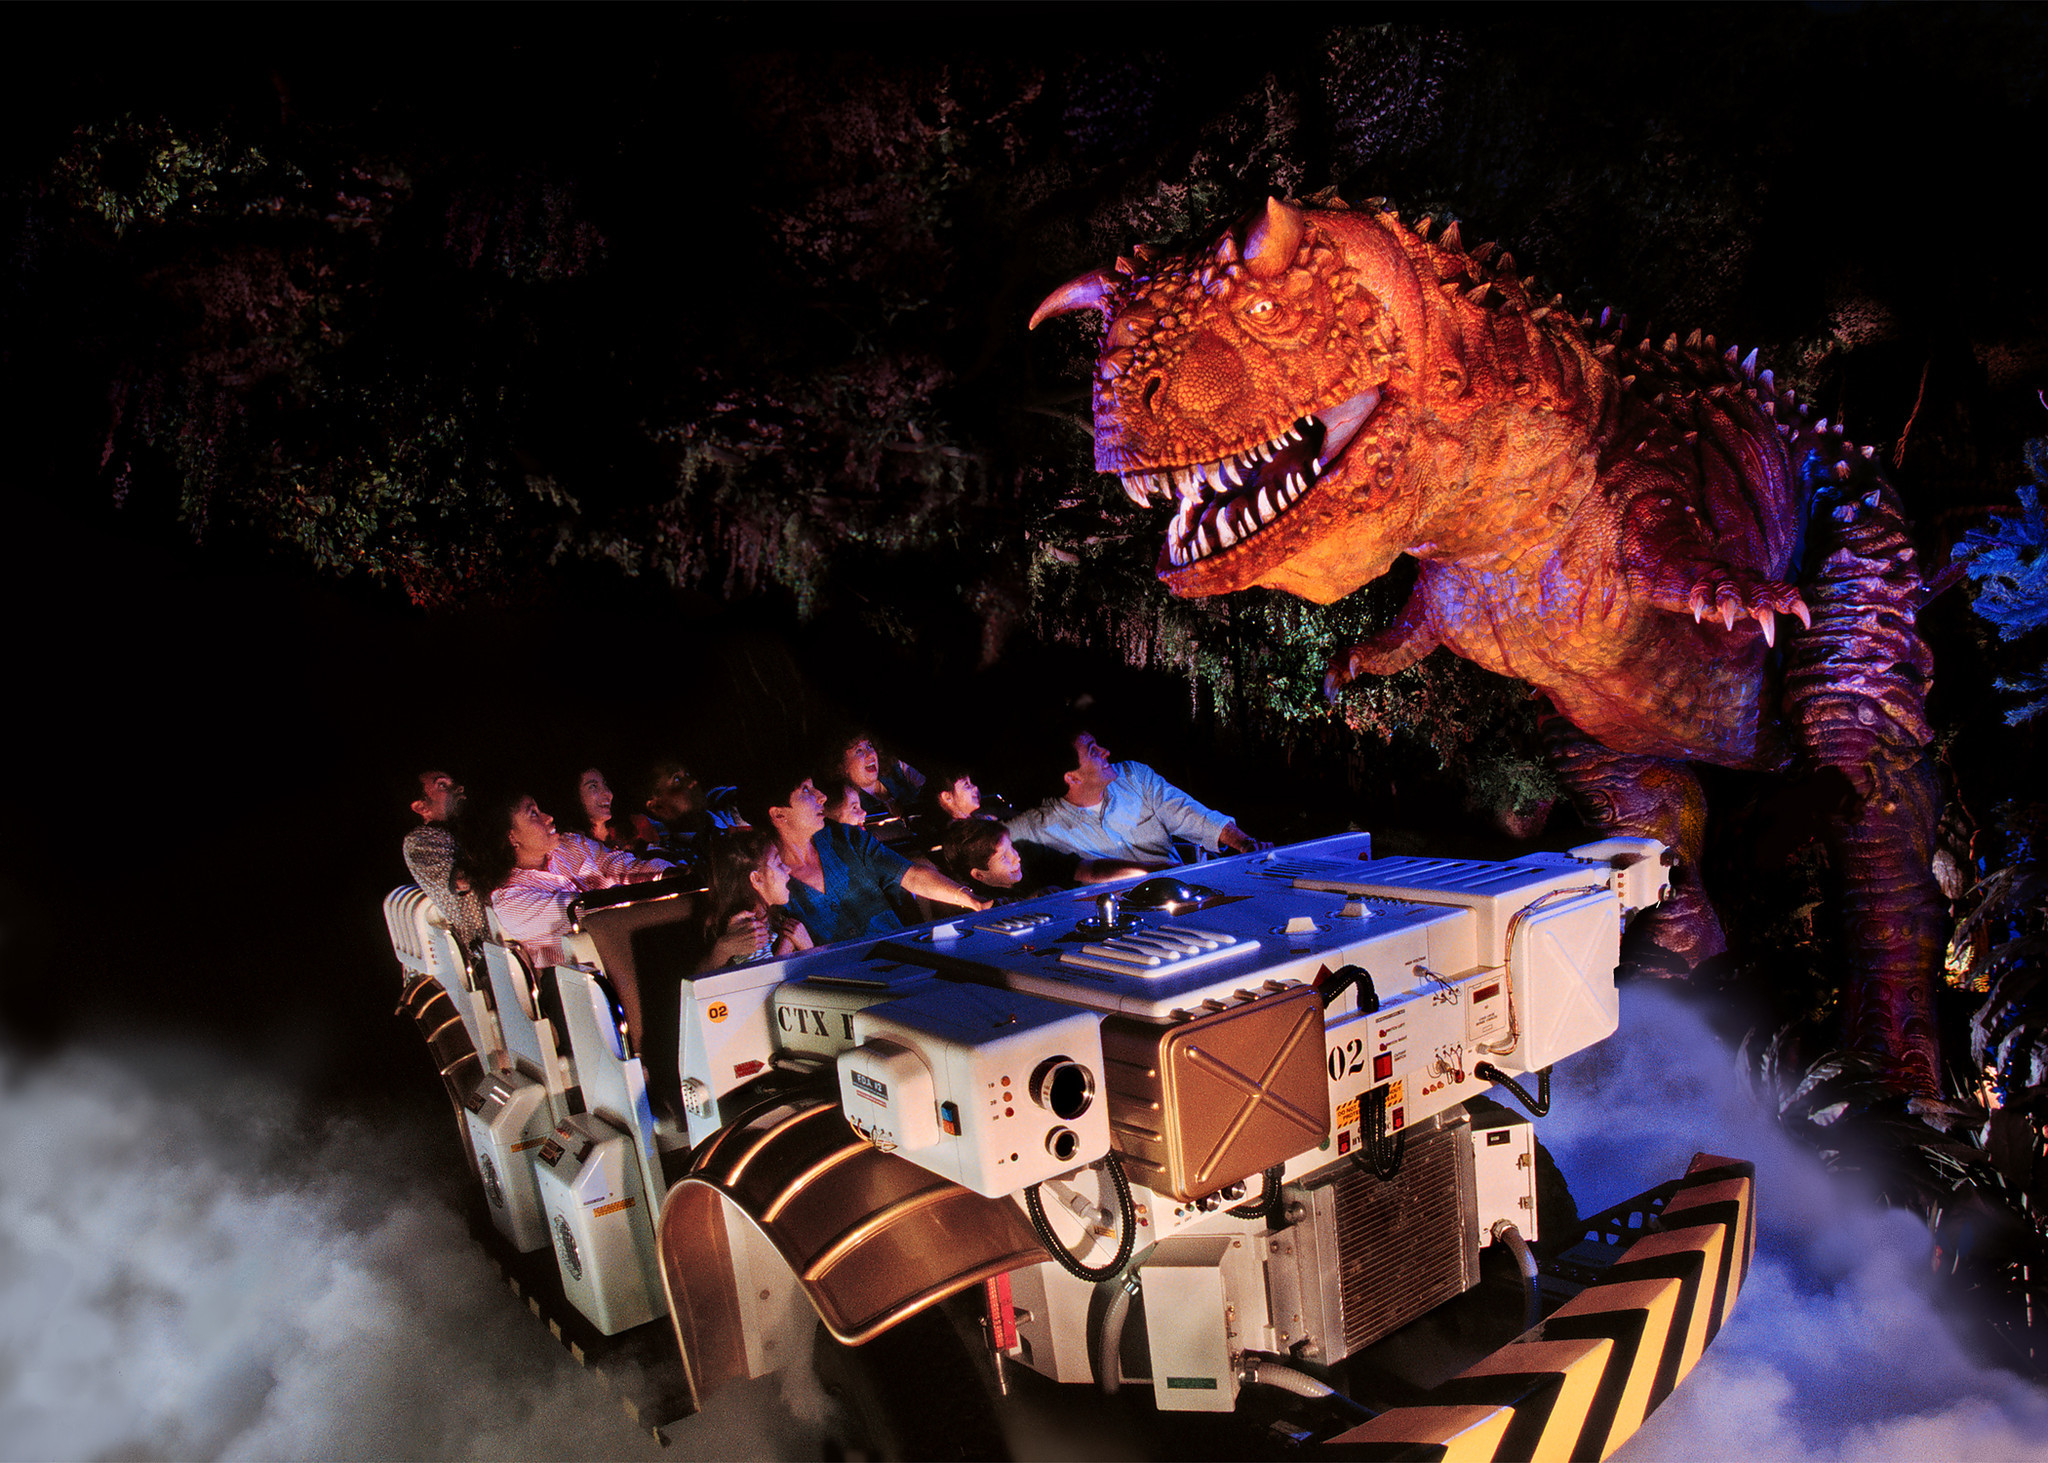 Disney: Dinosaur ride at Animal Kingdom down for 2 months - Orlando ...